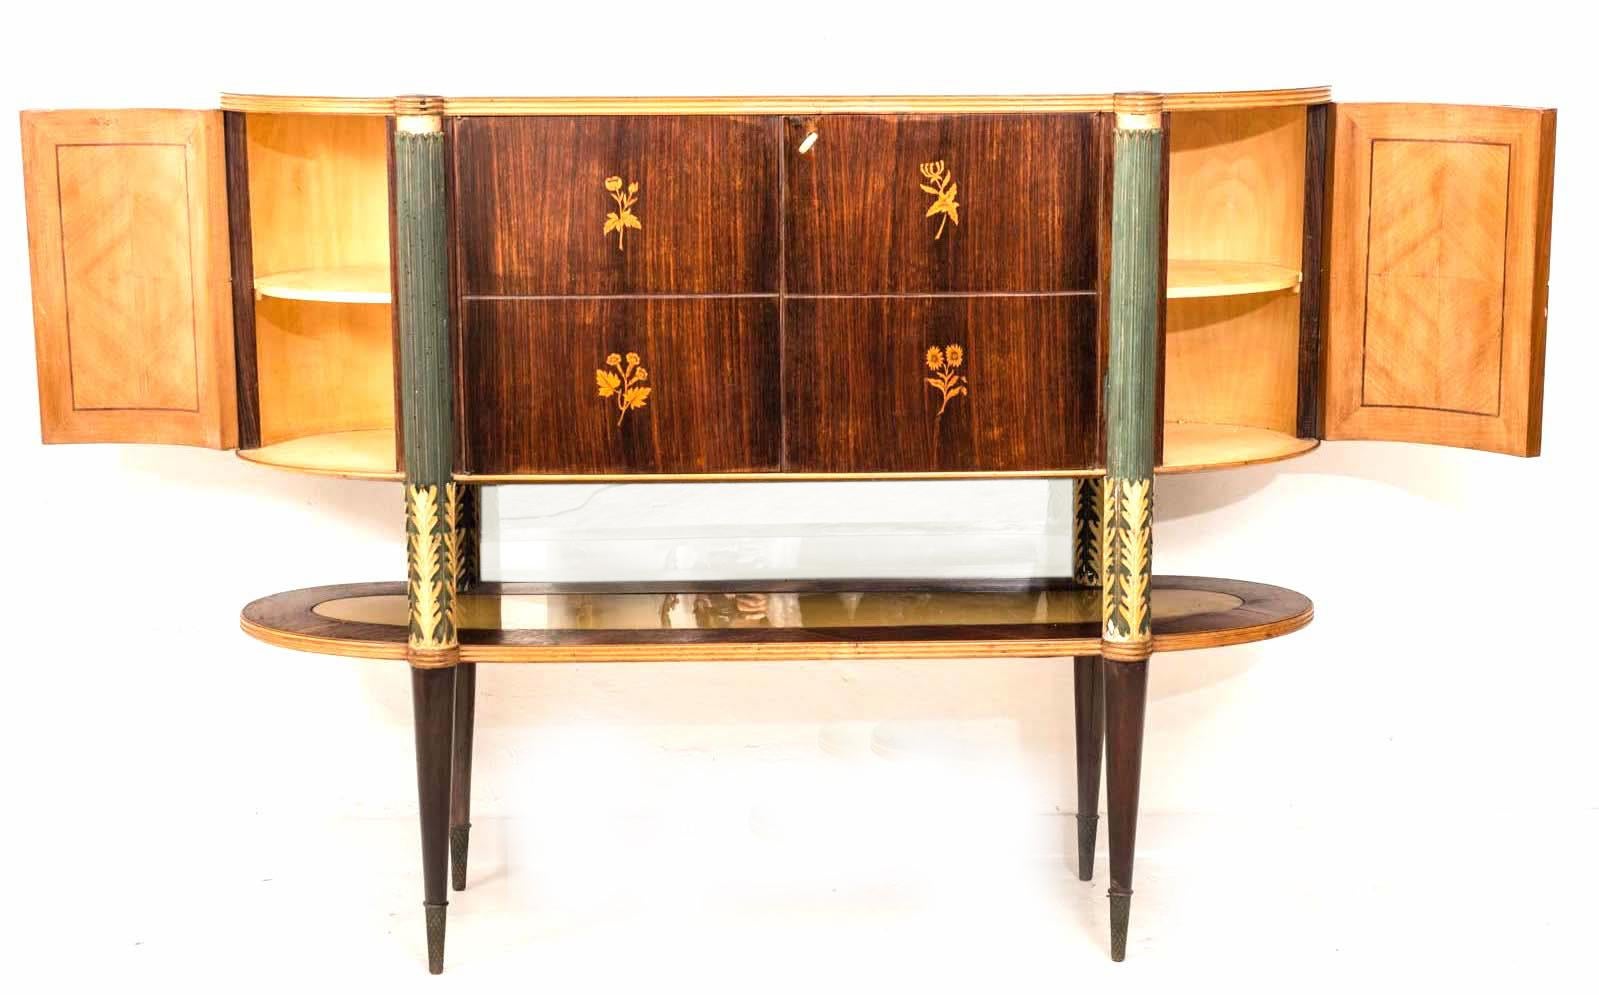 20th Century Italian Midcentury Oval Shaped Rare Bar Cabinet or Sideboard by Pierluigi Colli